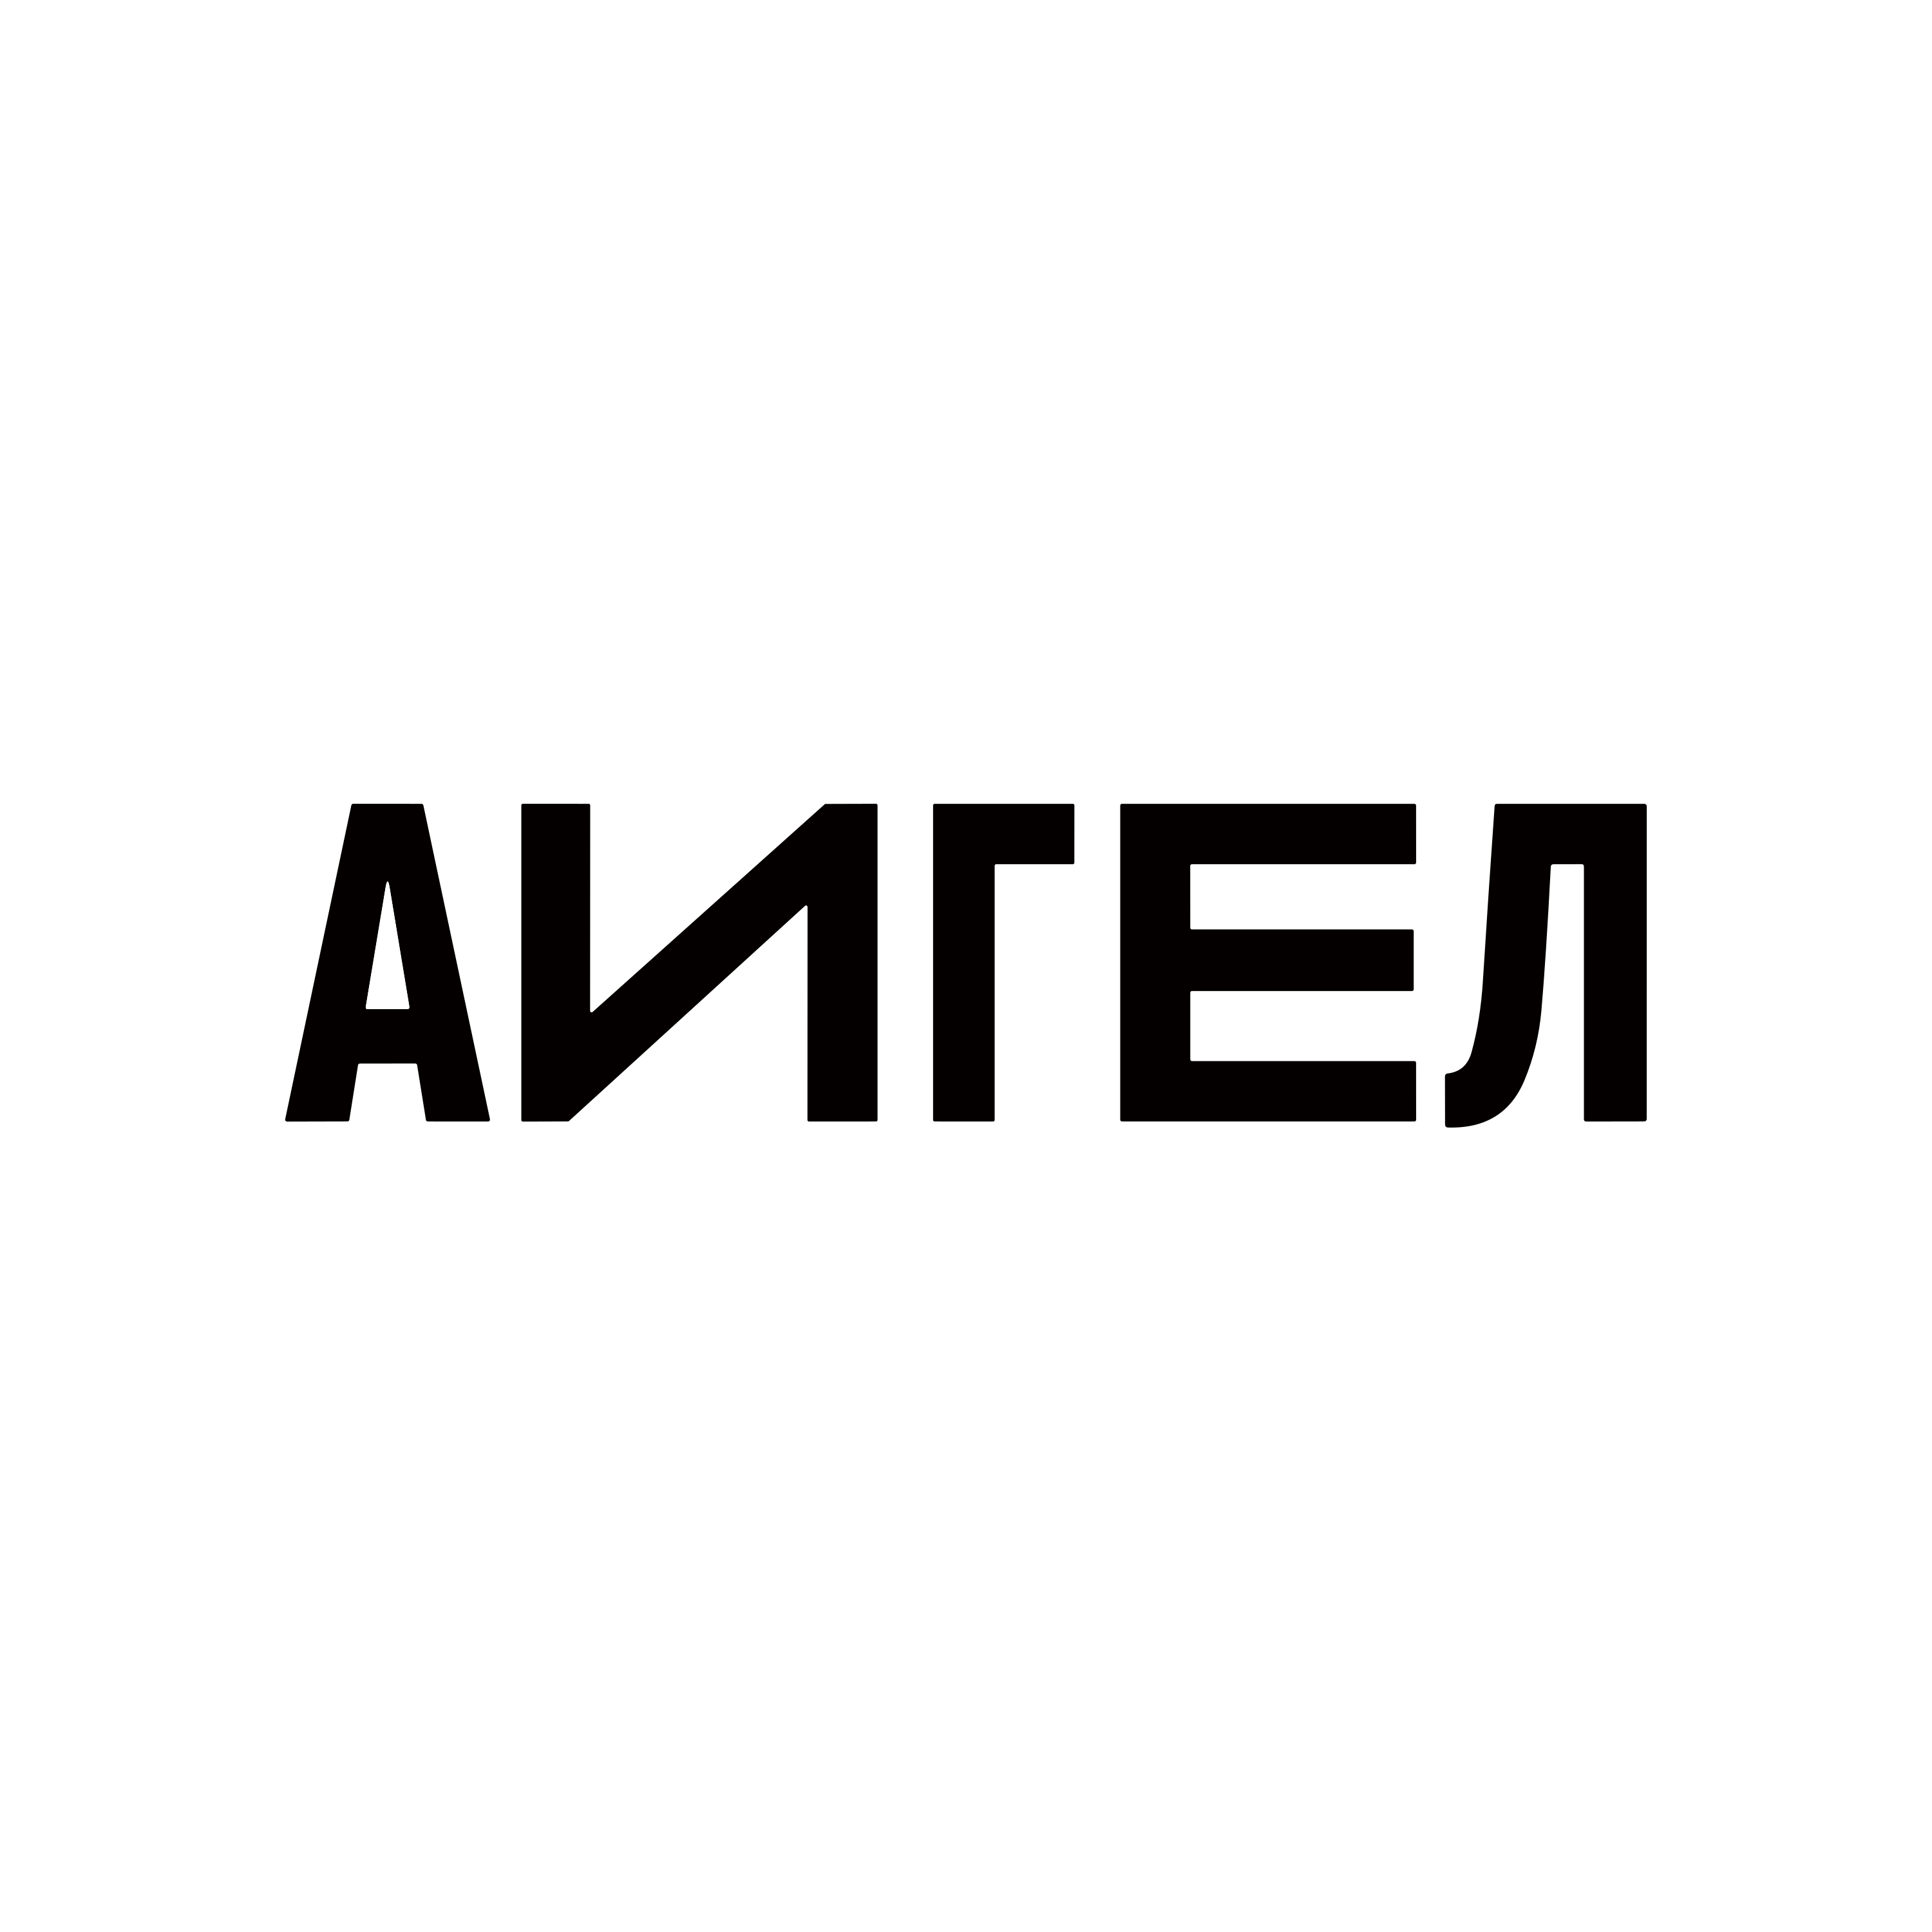 Aigel Logo  Transparent Image